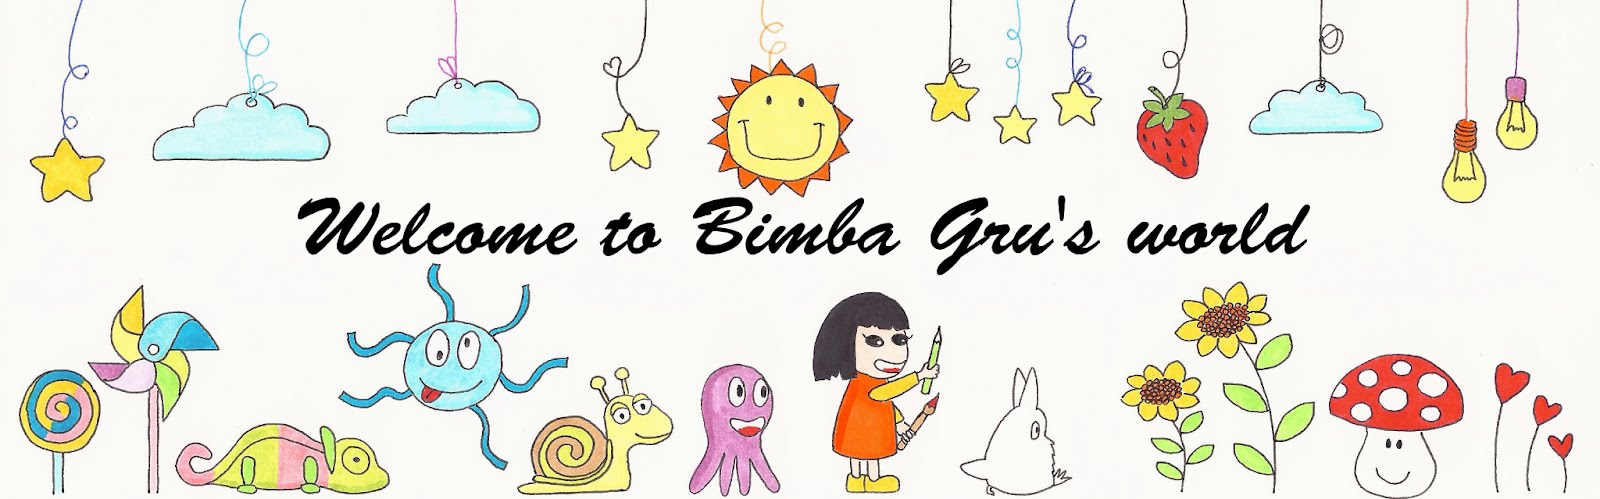 Welcome to Bimba Gru's world...